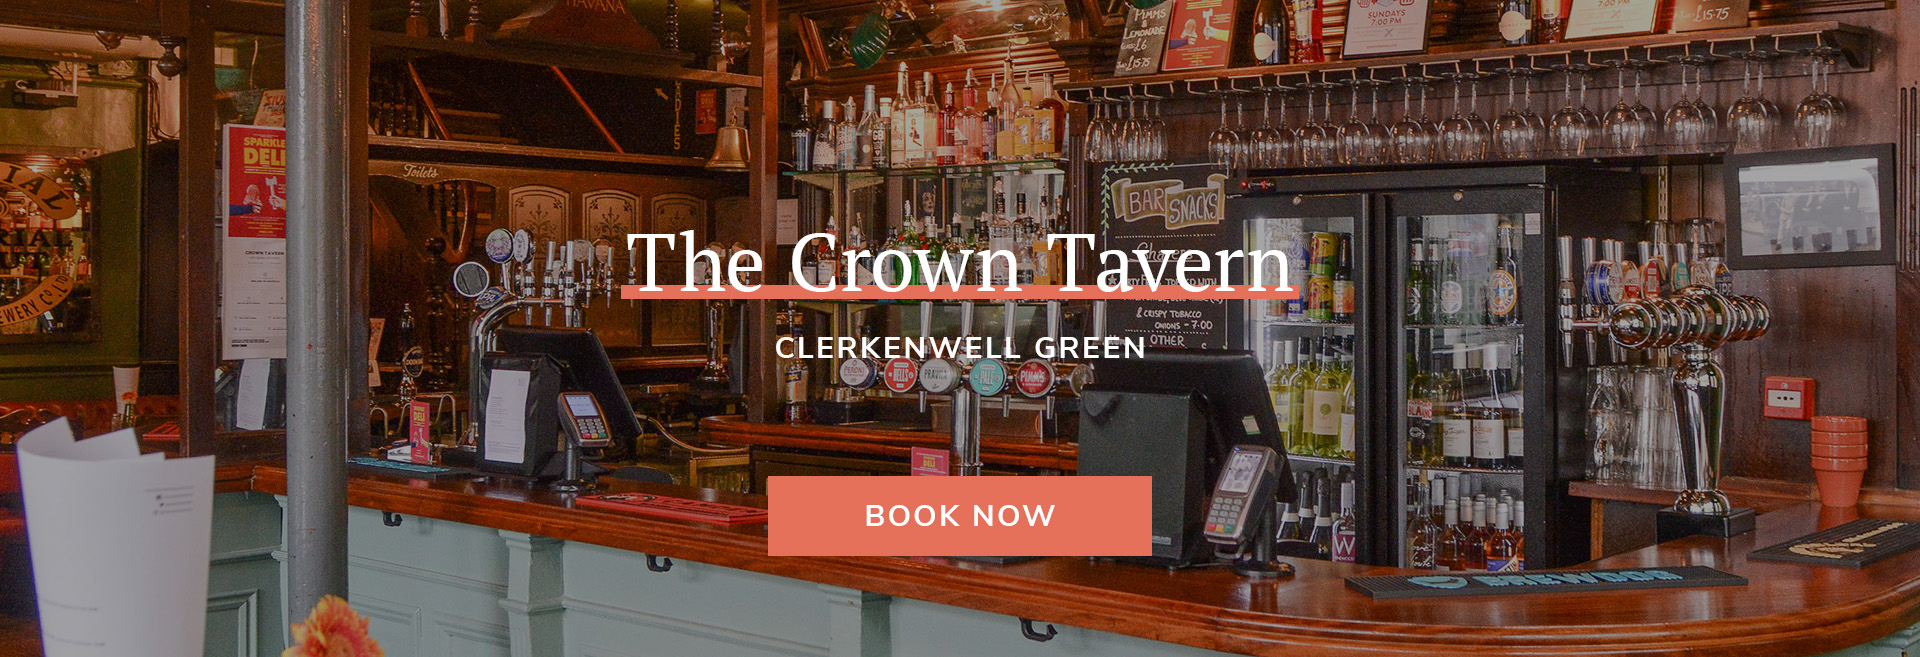 The Crown Tavern Banner 2